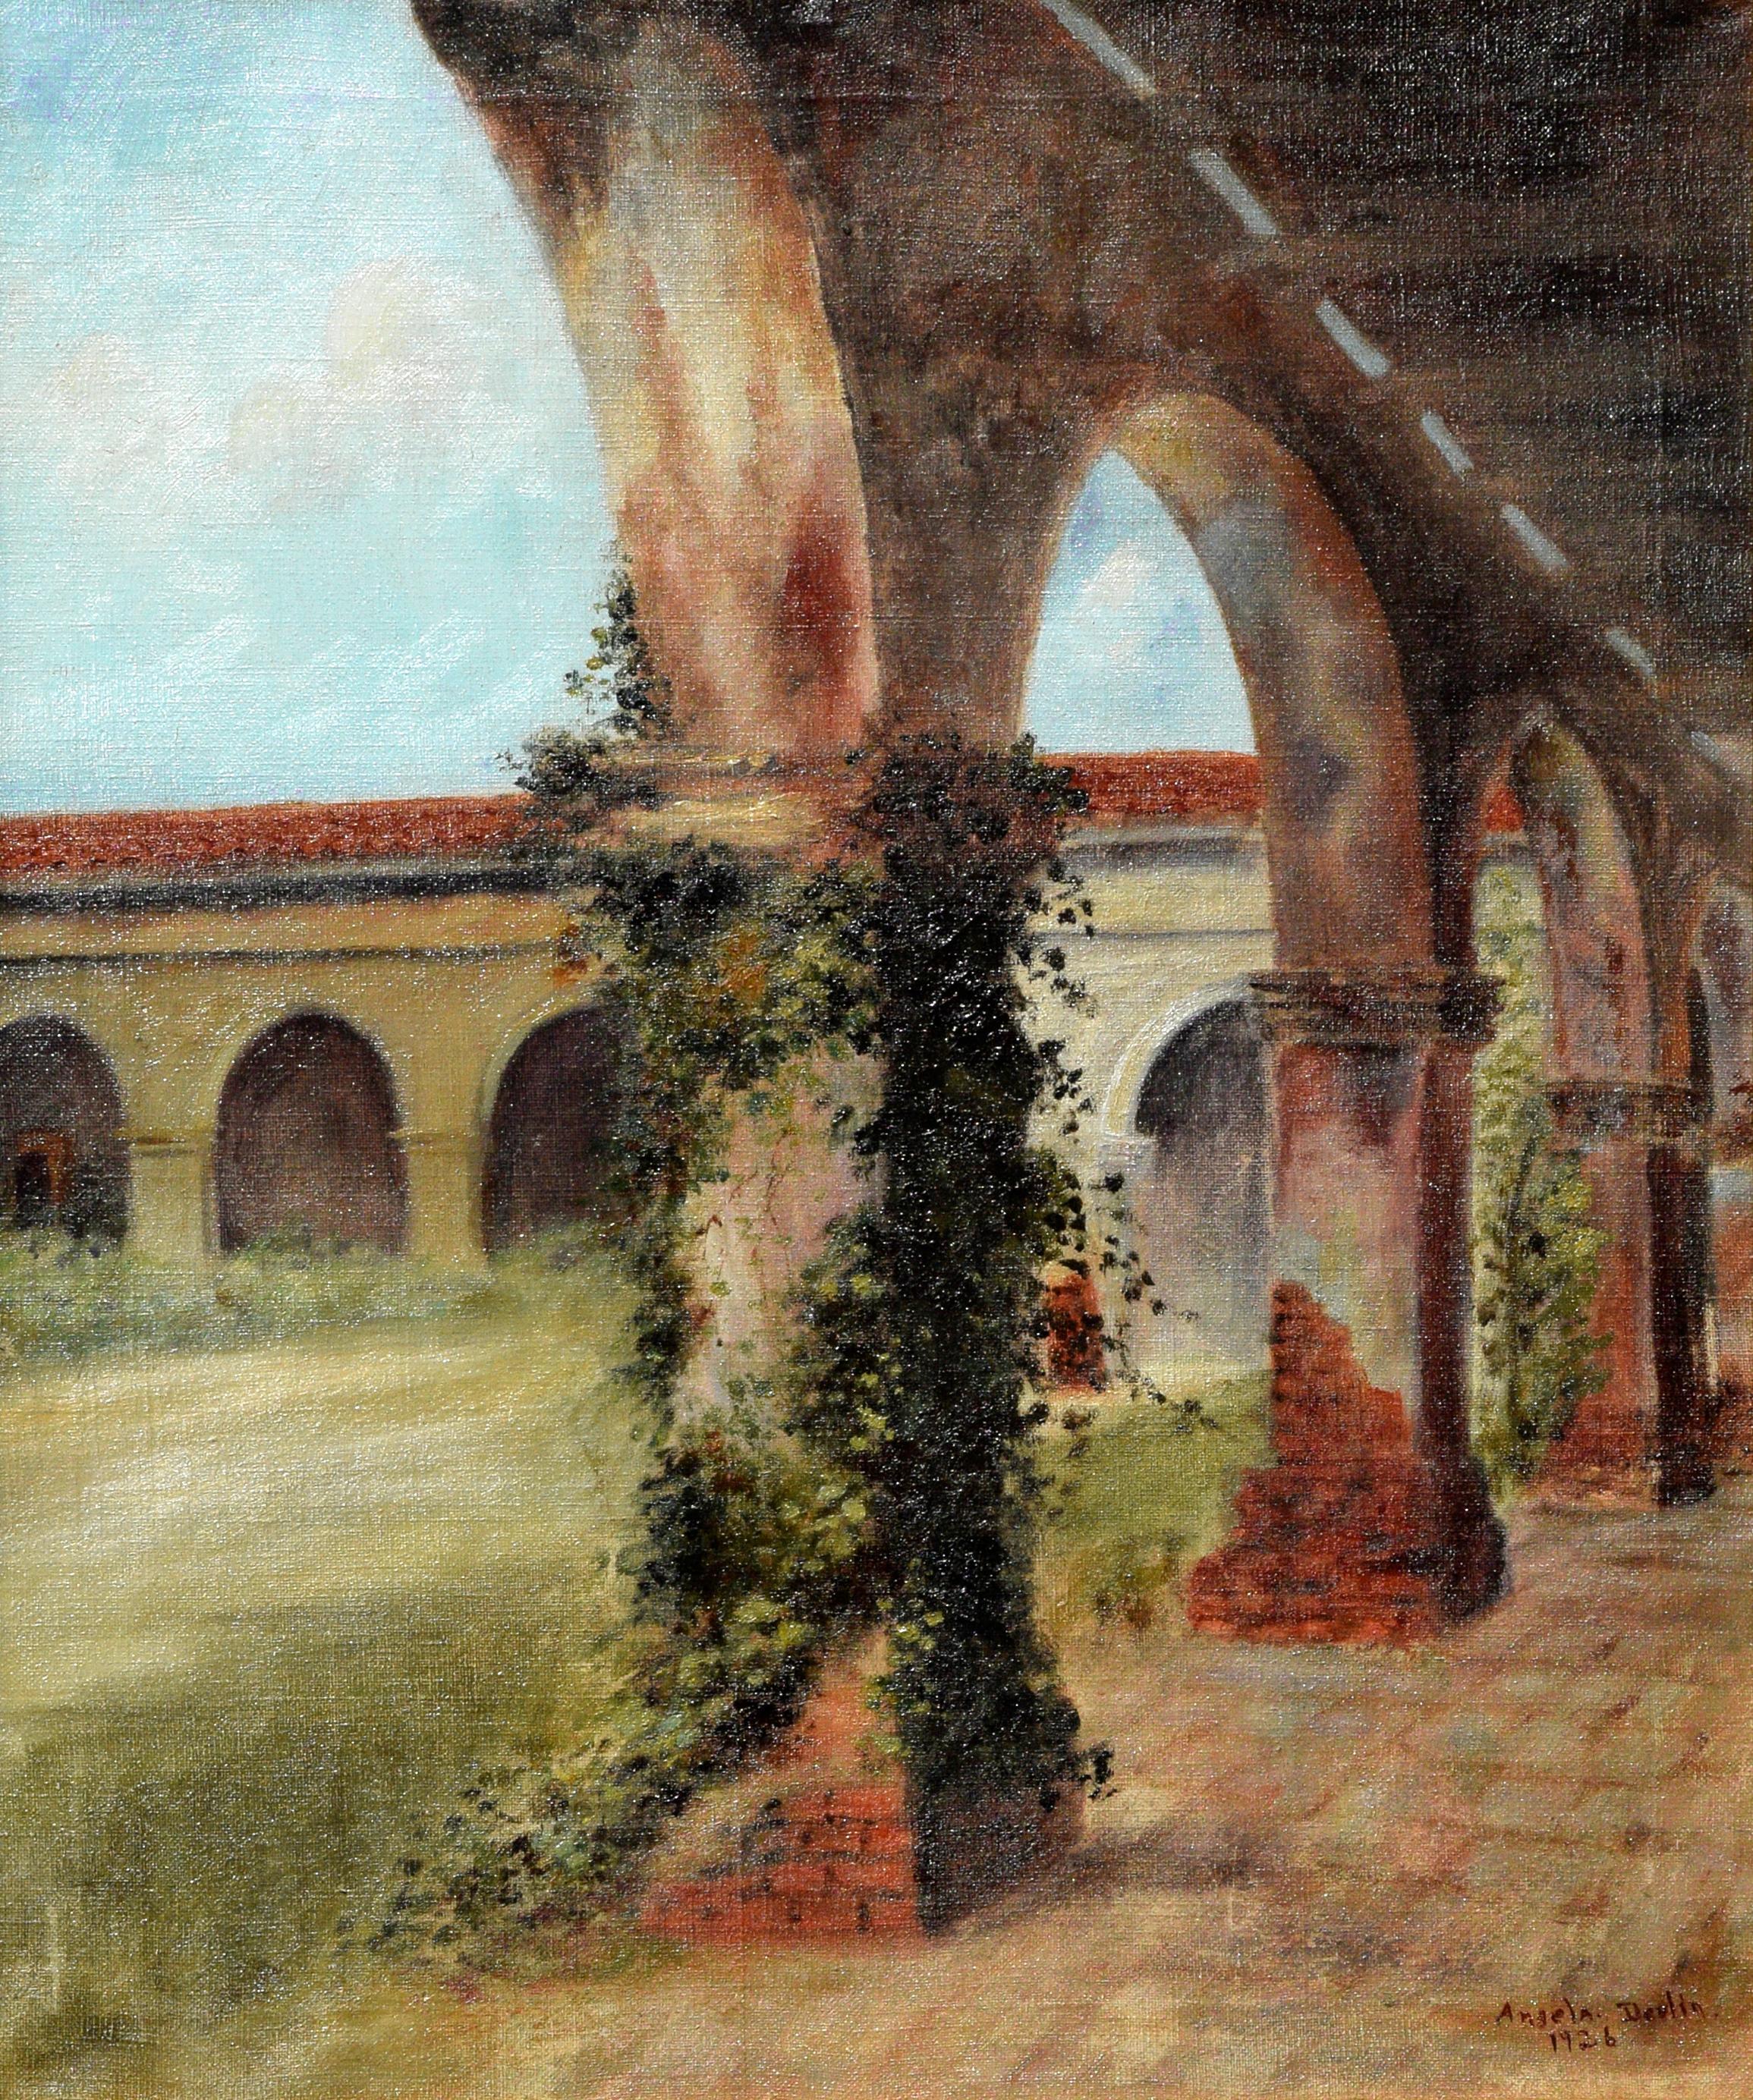 1920s California Mission San Juan Capistrano Courtyard Column Garden Landscape  - Painting by Angela Devlin